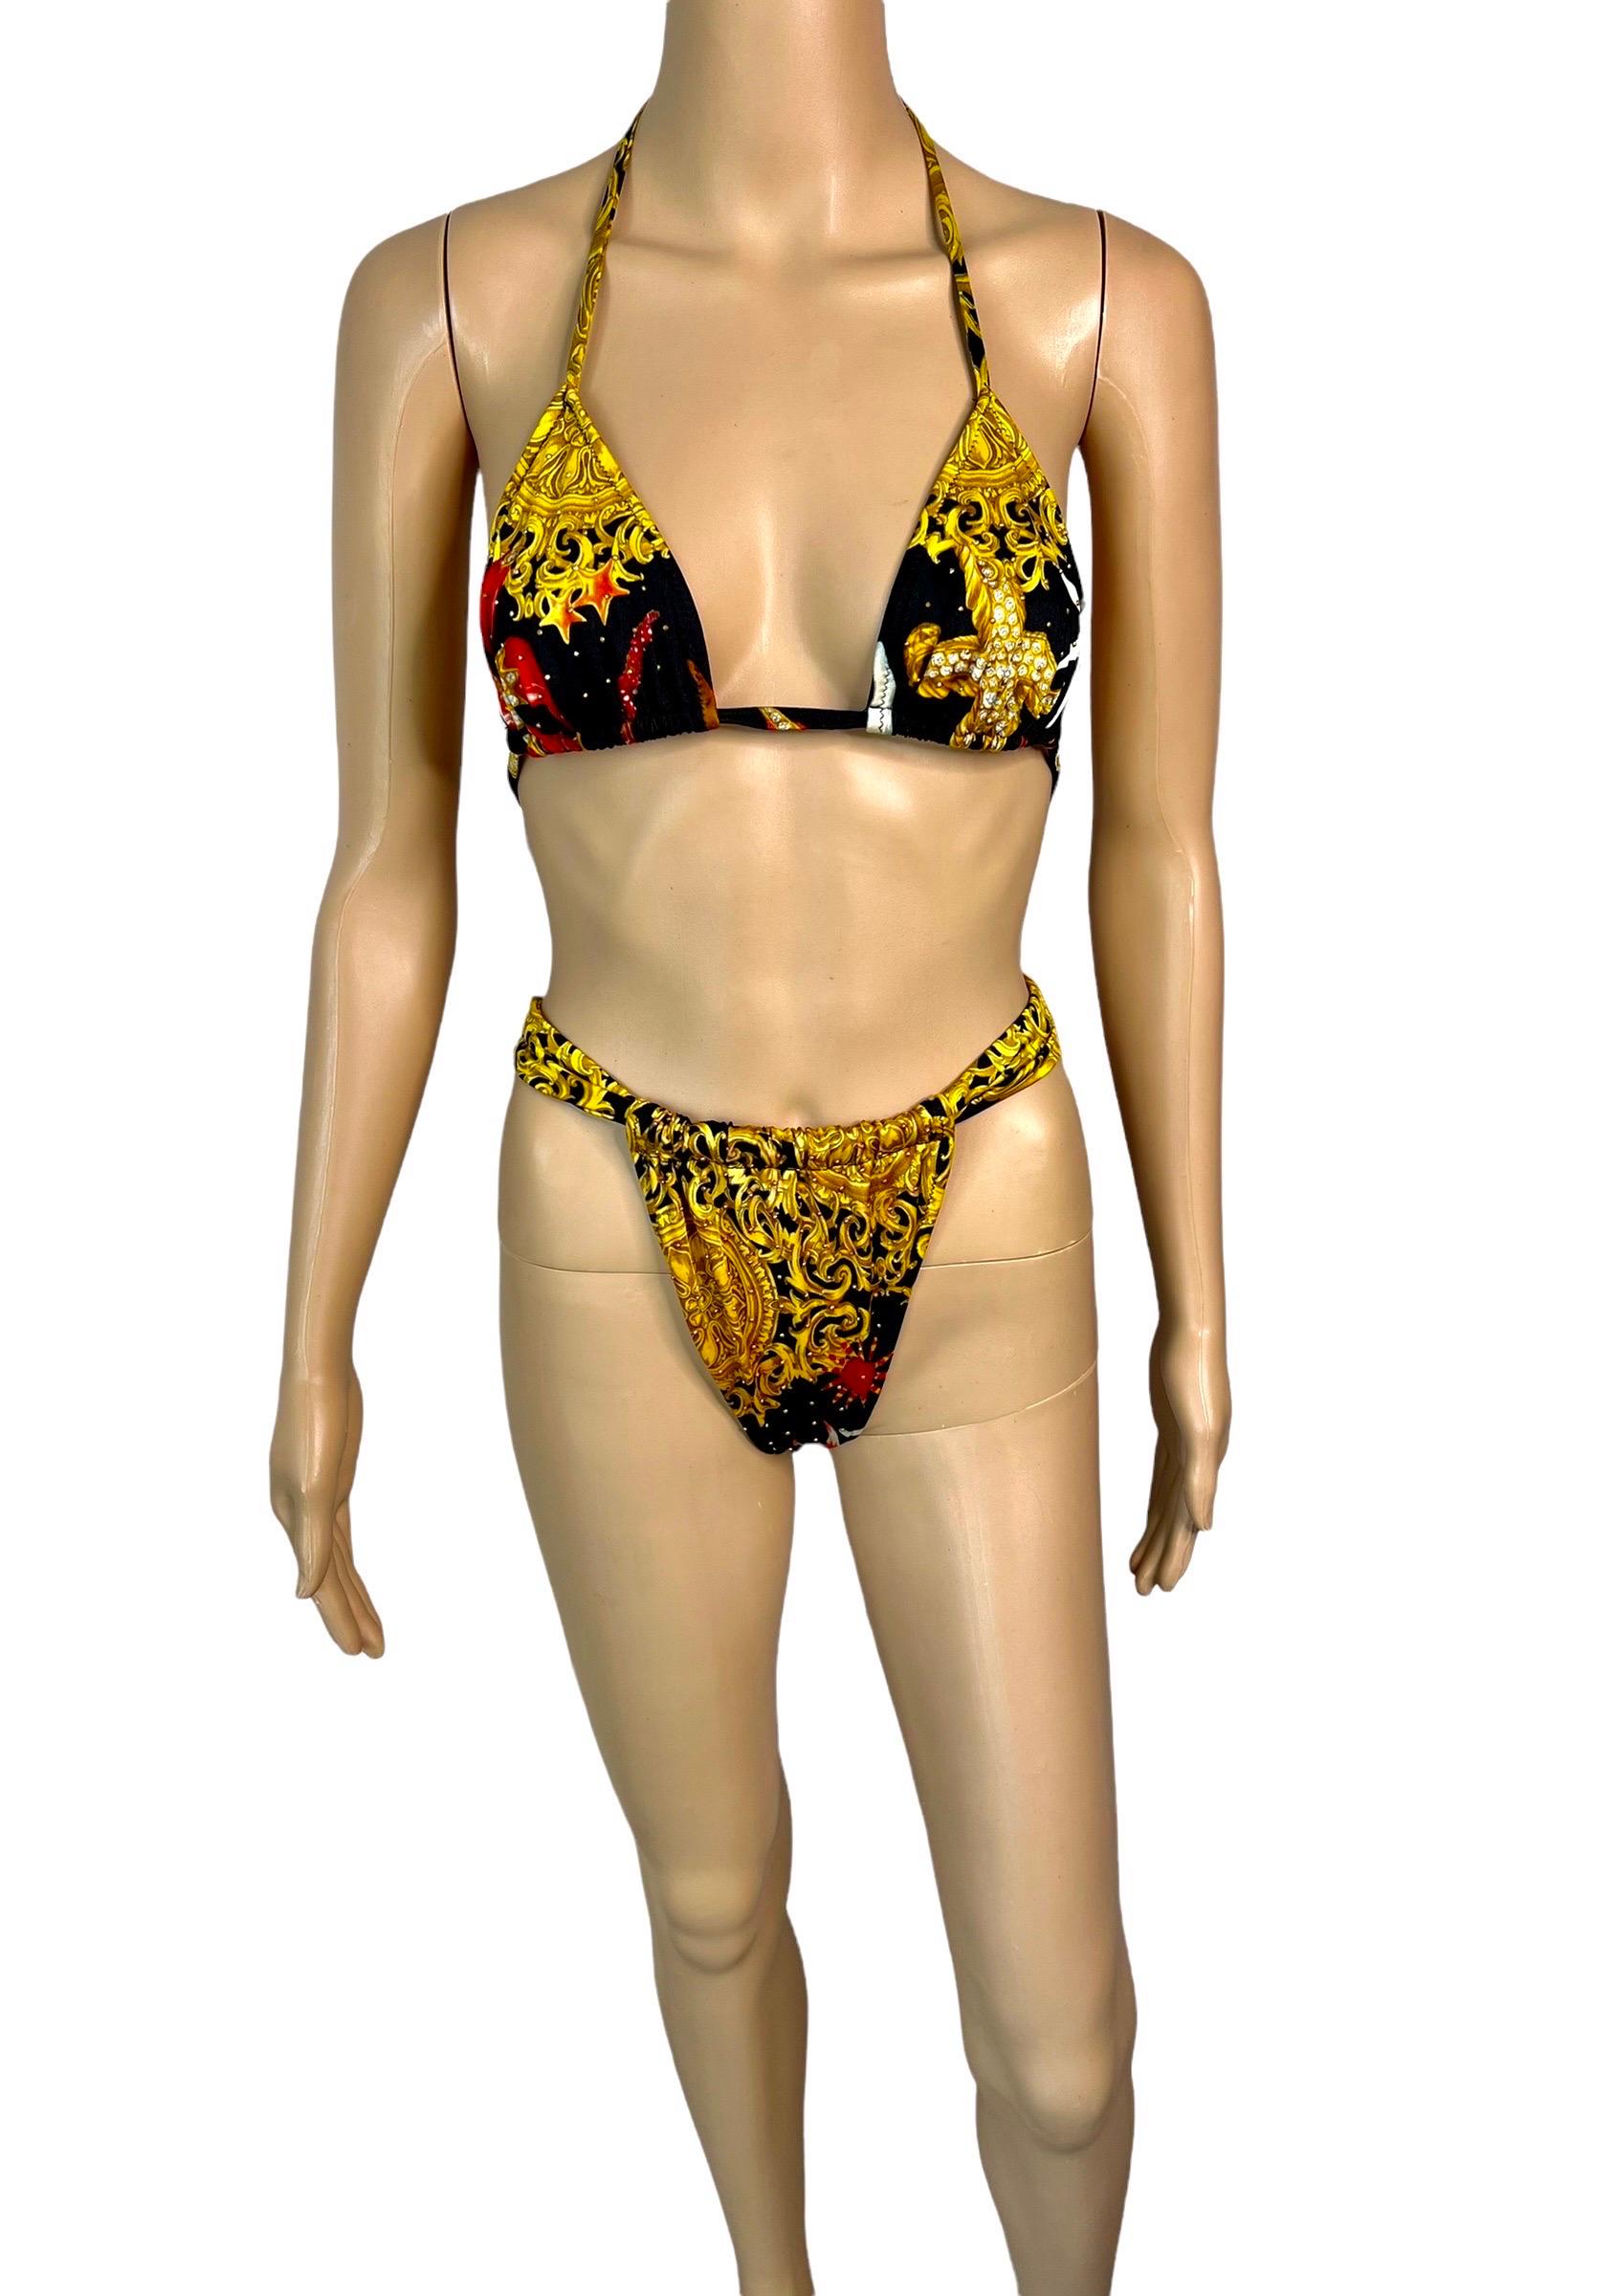 Gianni Versace S/S 1992 Baroque Embellished Two-Piece Bikini Swimsuit Swimwear For Sale 7